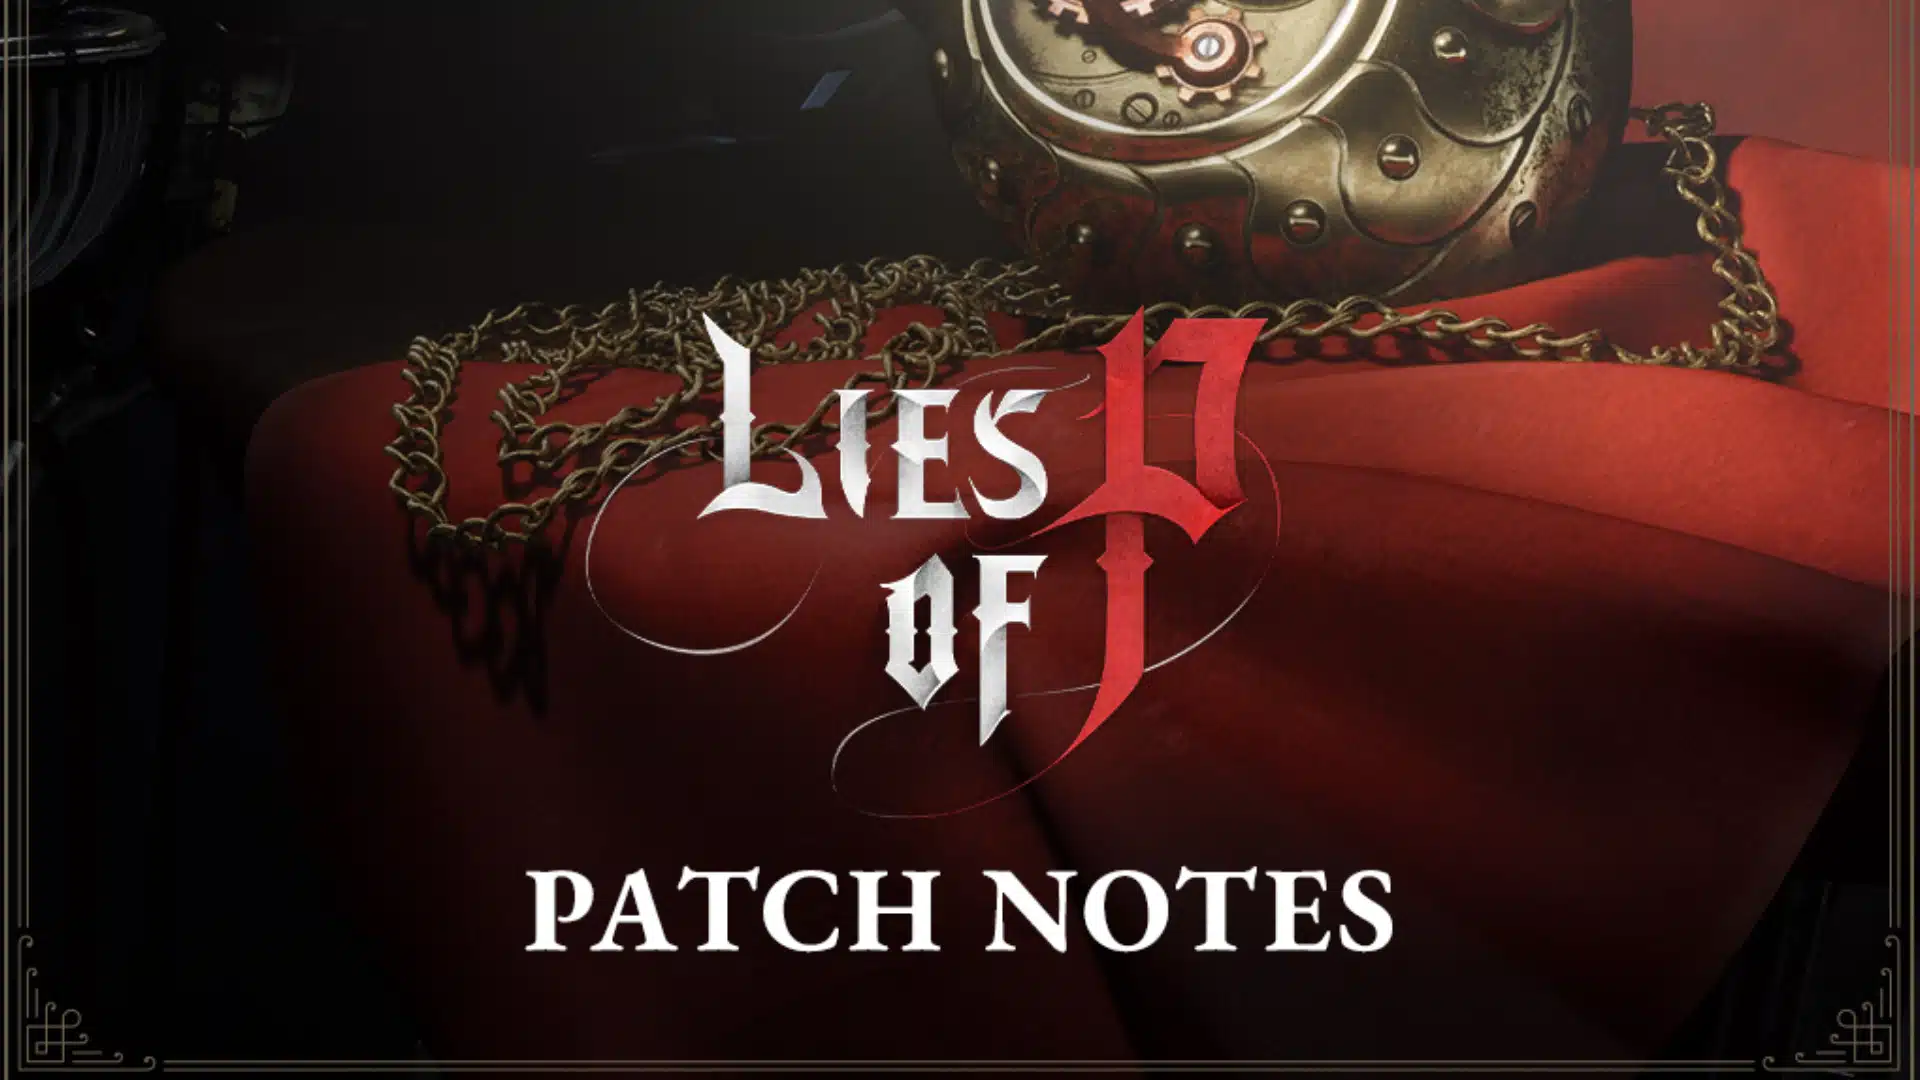 Lies of P Update 1.04 Patch Notes December 12